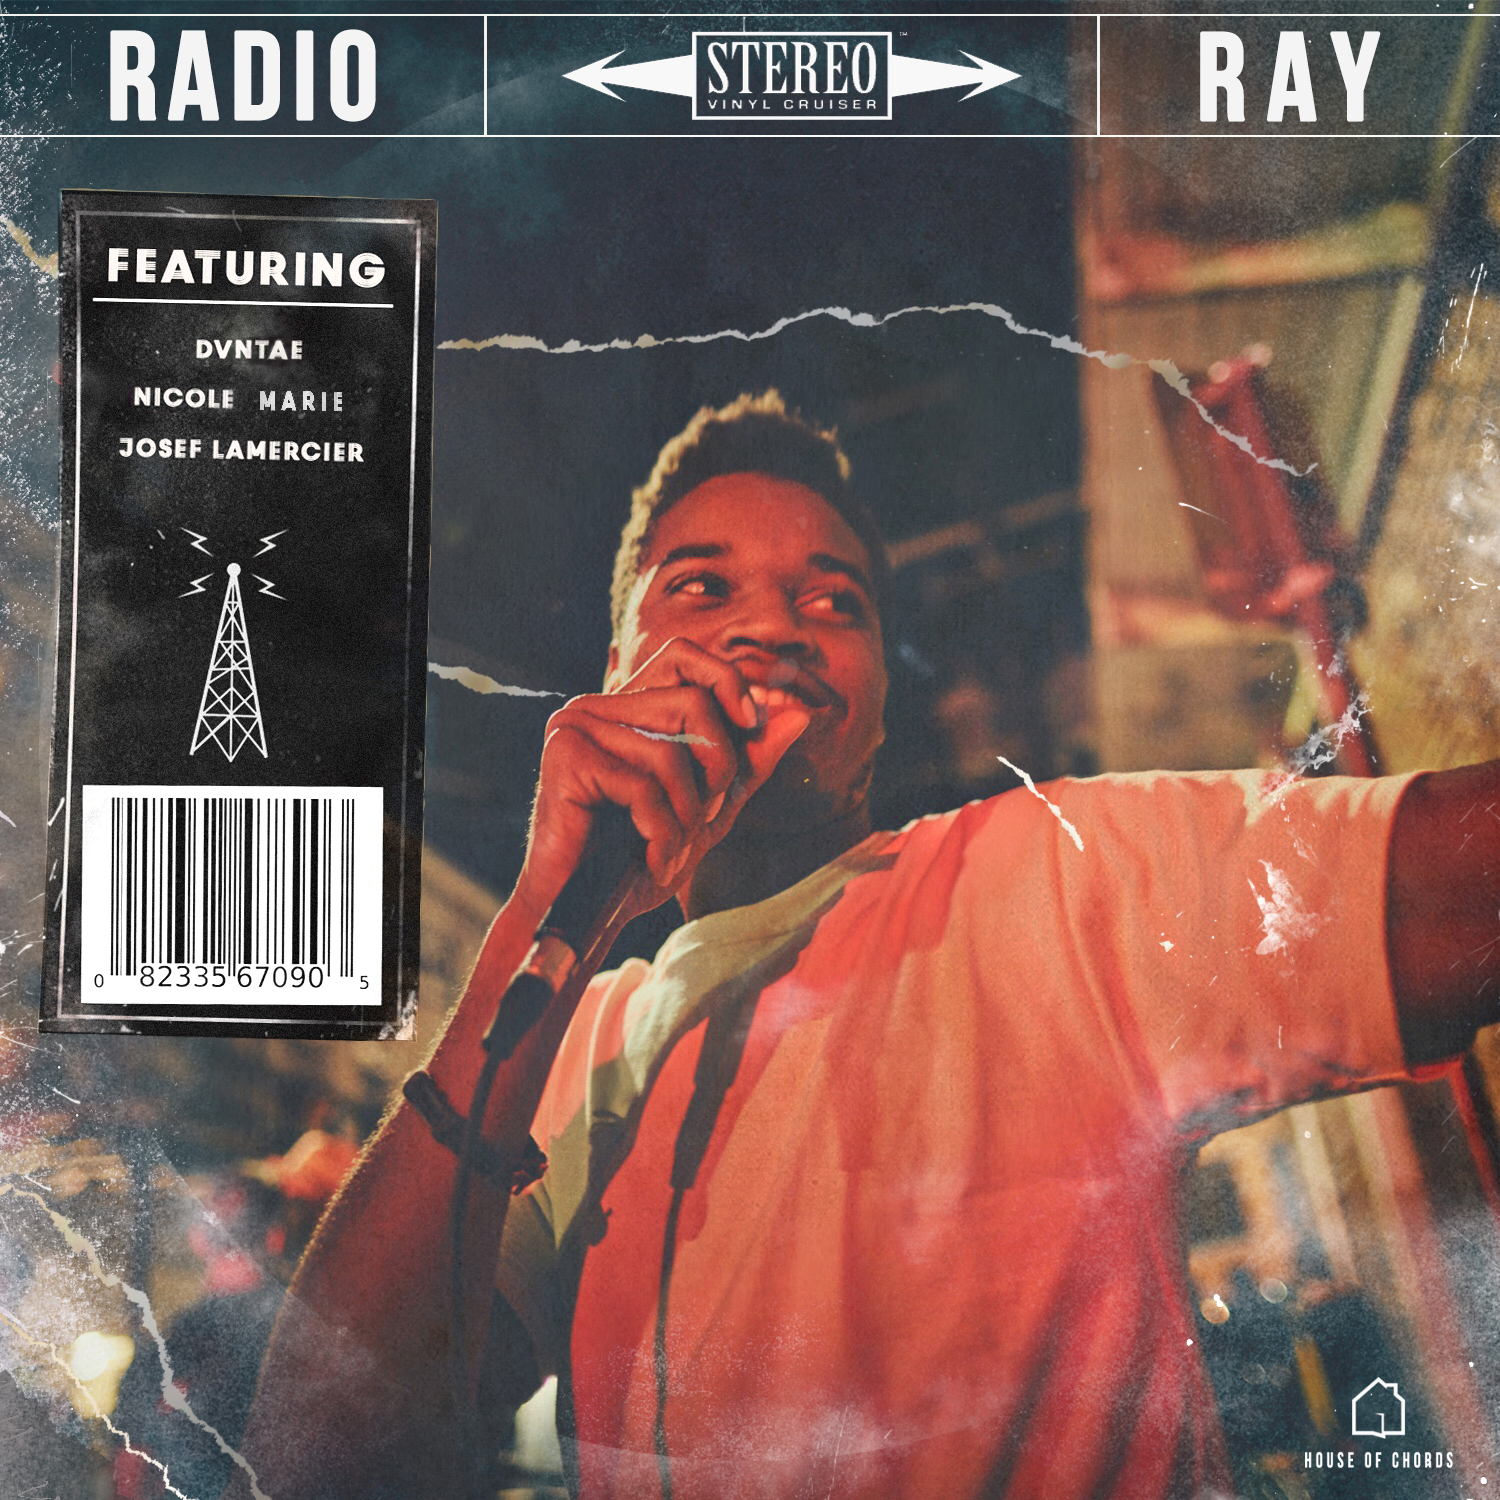 Ray Delivers New Single “Radio”